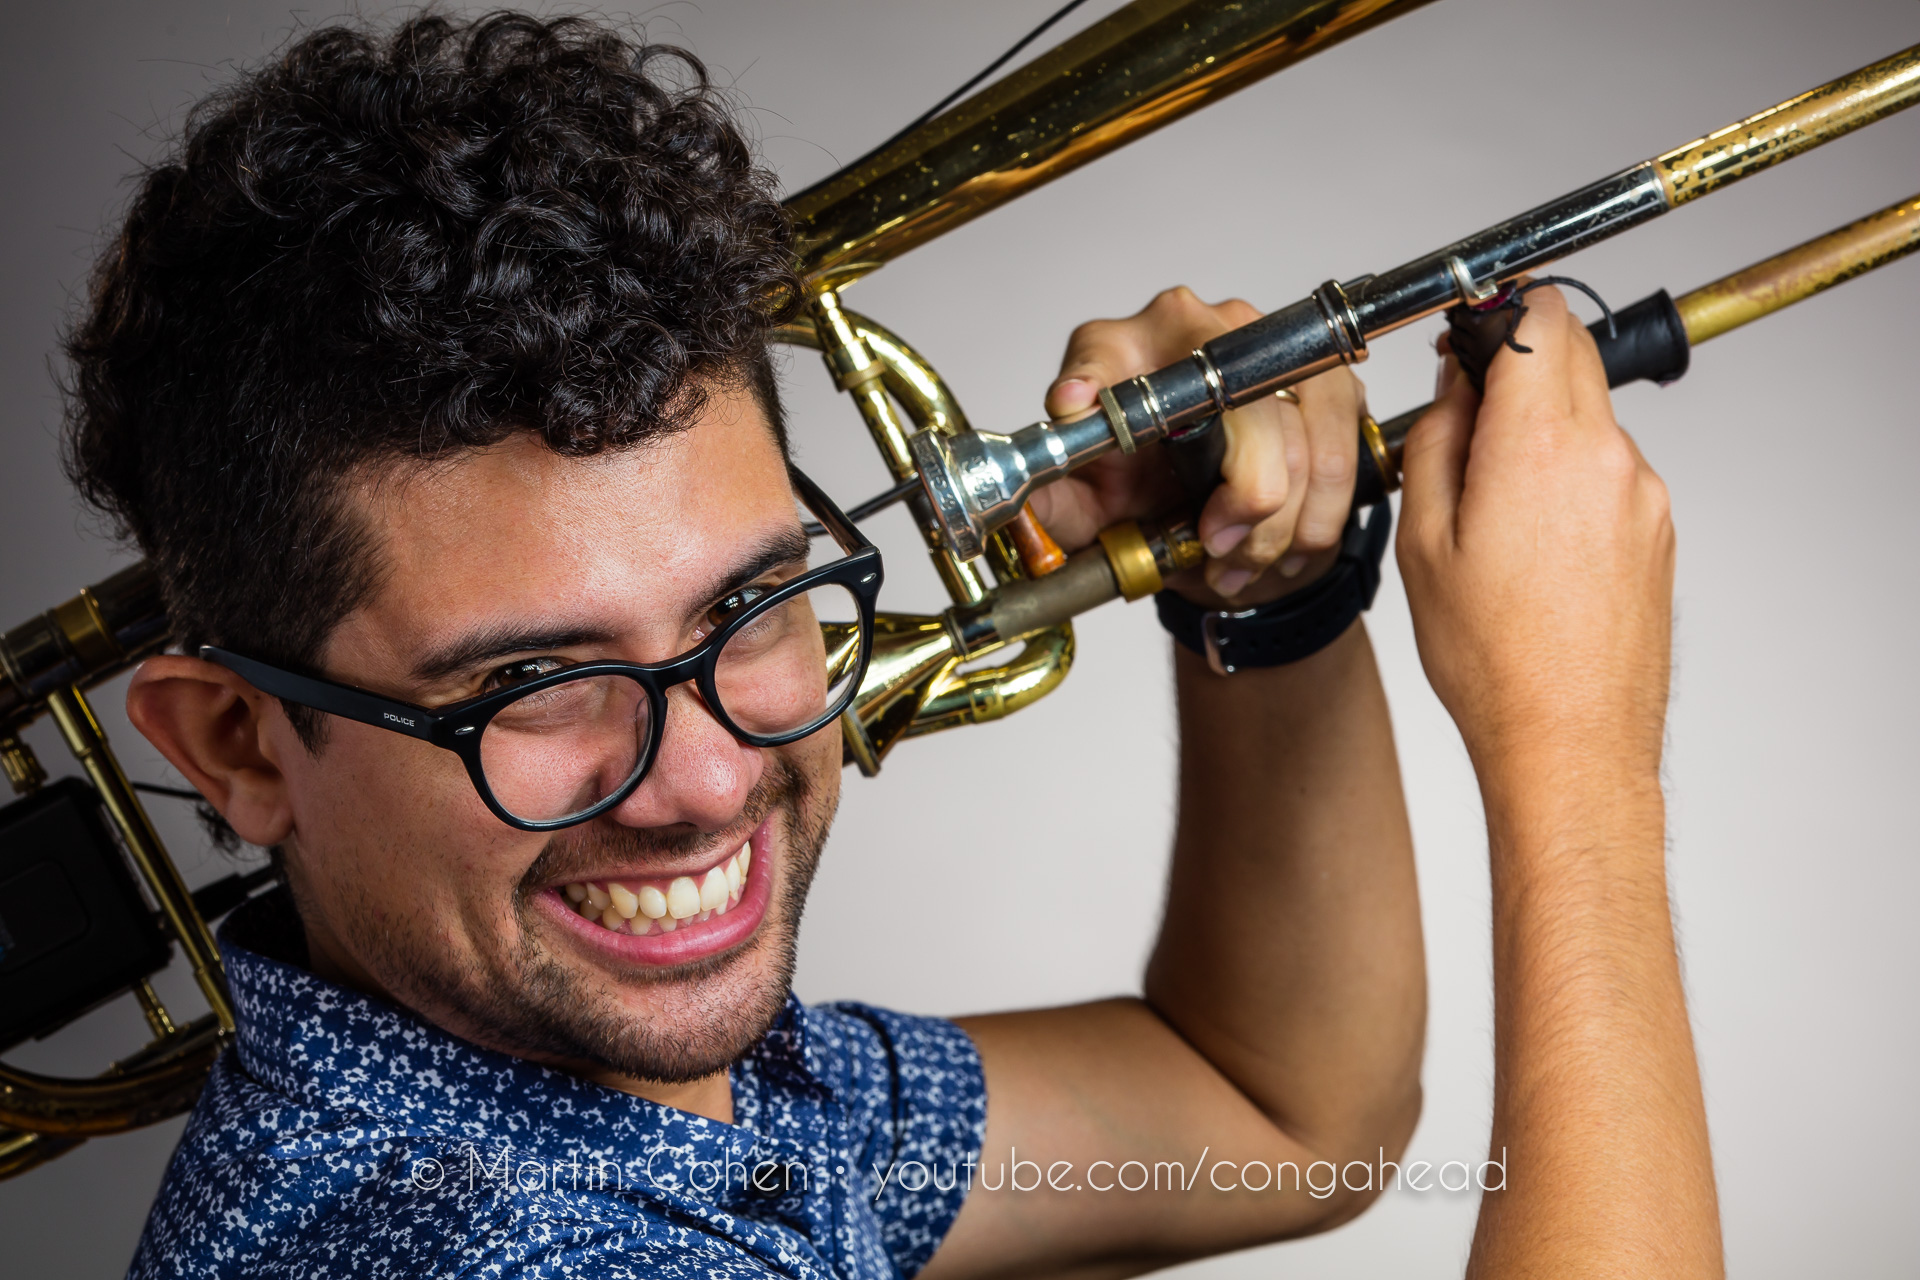 Trombone, Jorge Chinchilla, Congahead, Music, Latin Music, Musician